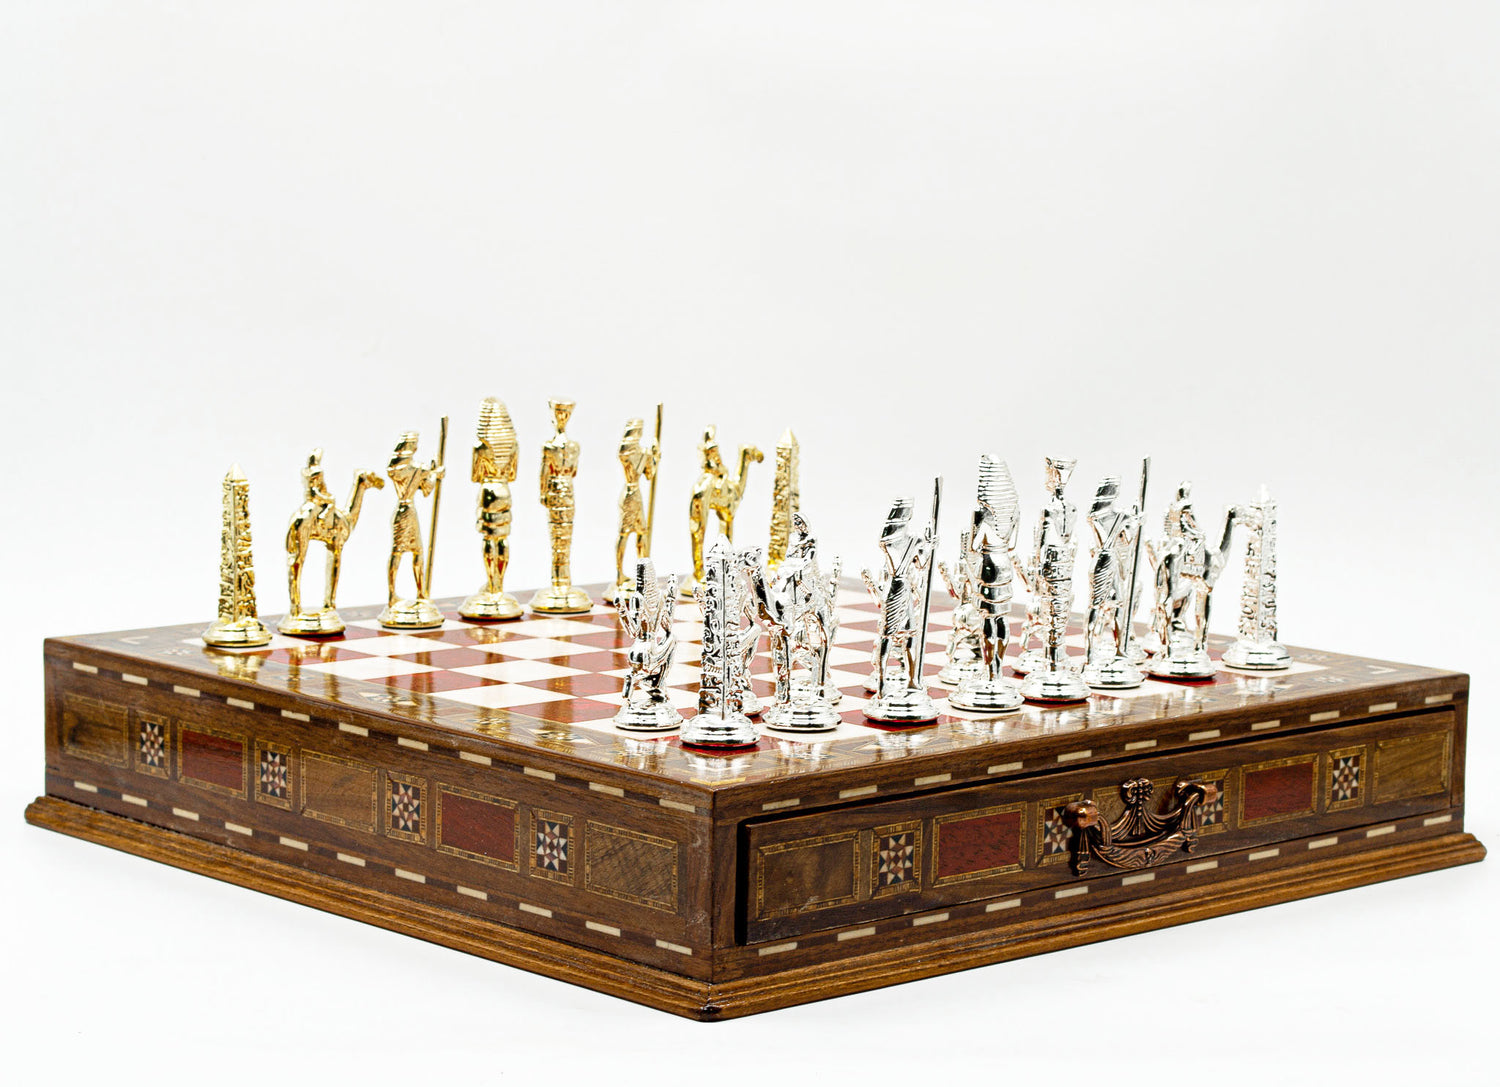 Handmade Chess Set - Egyptian: Wood with Drawer Storage - Ketohandcraft